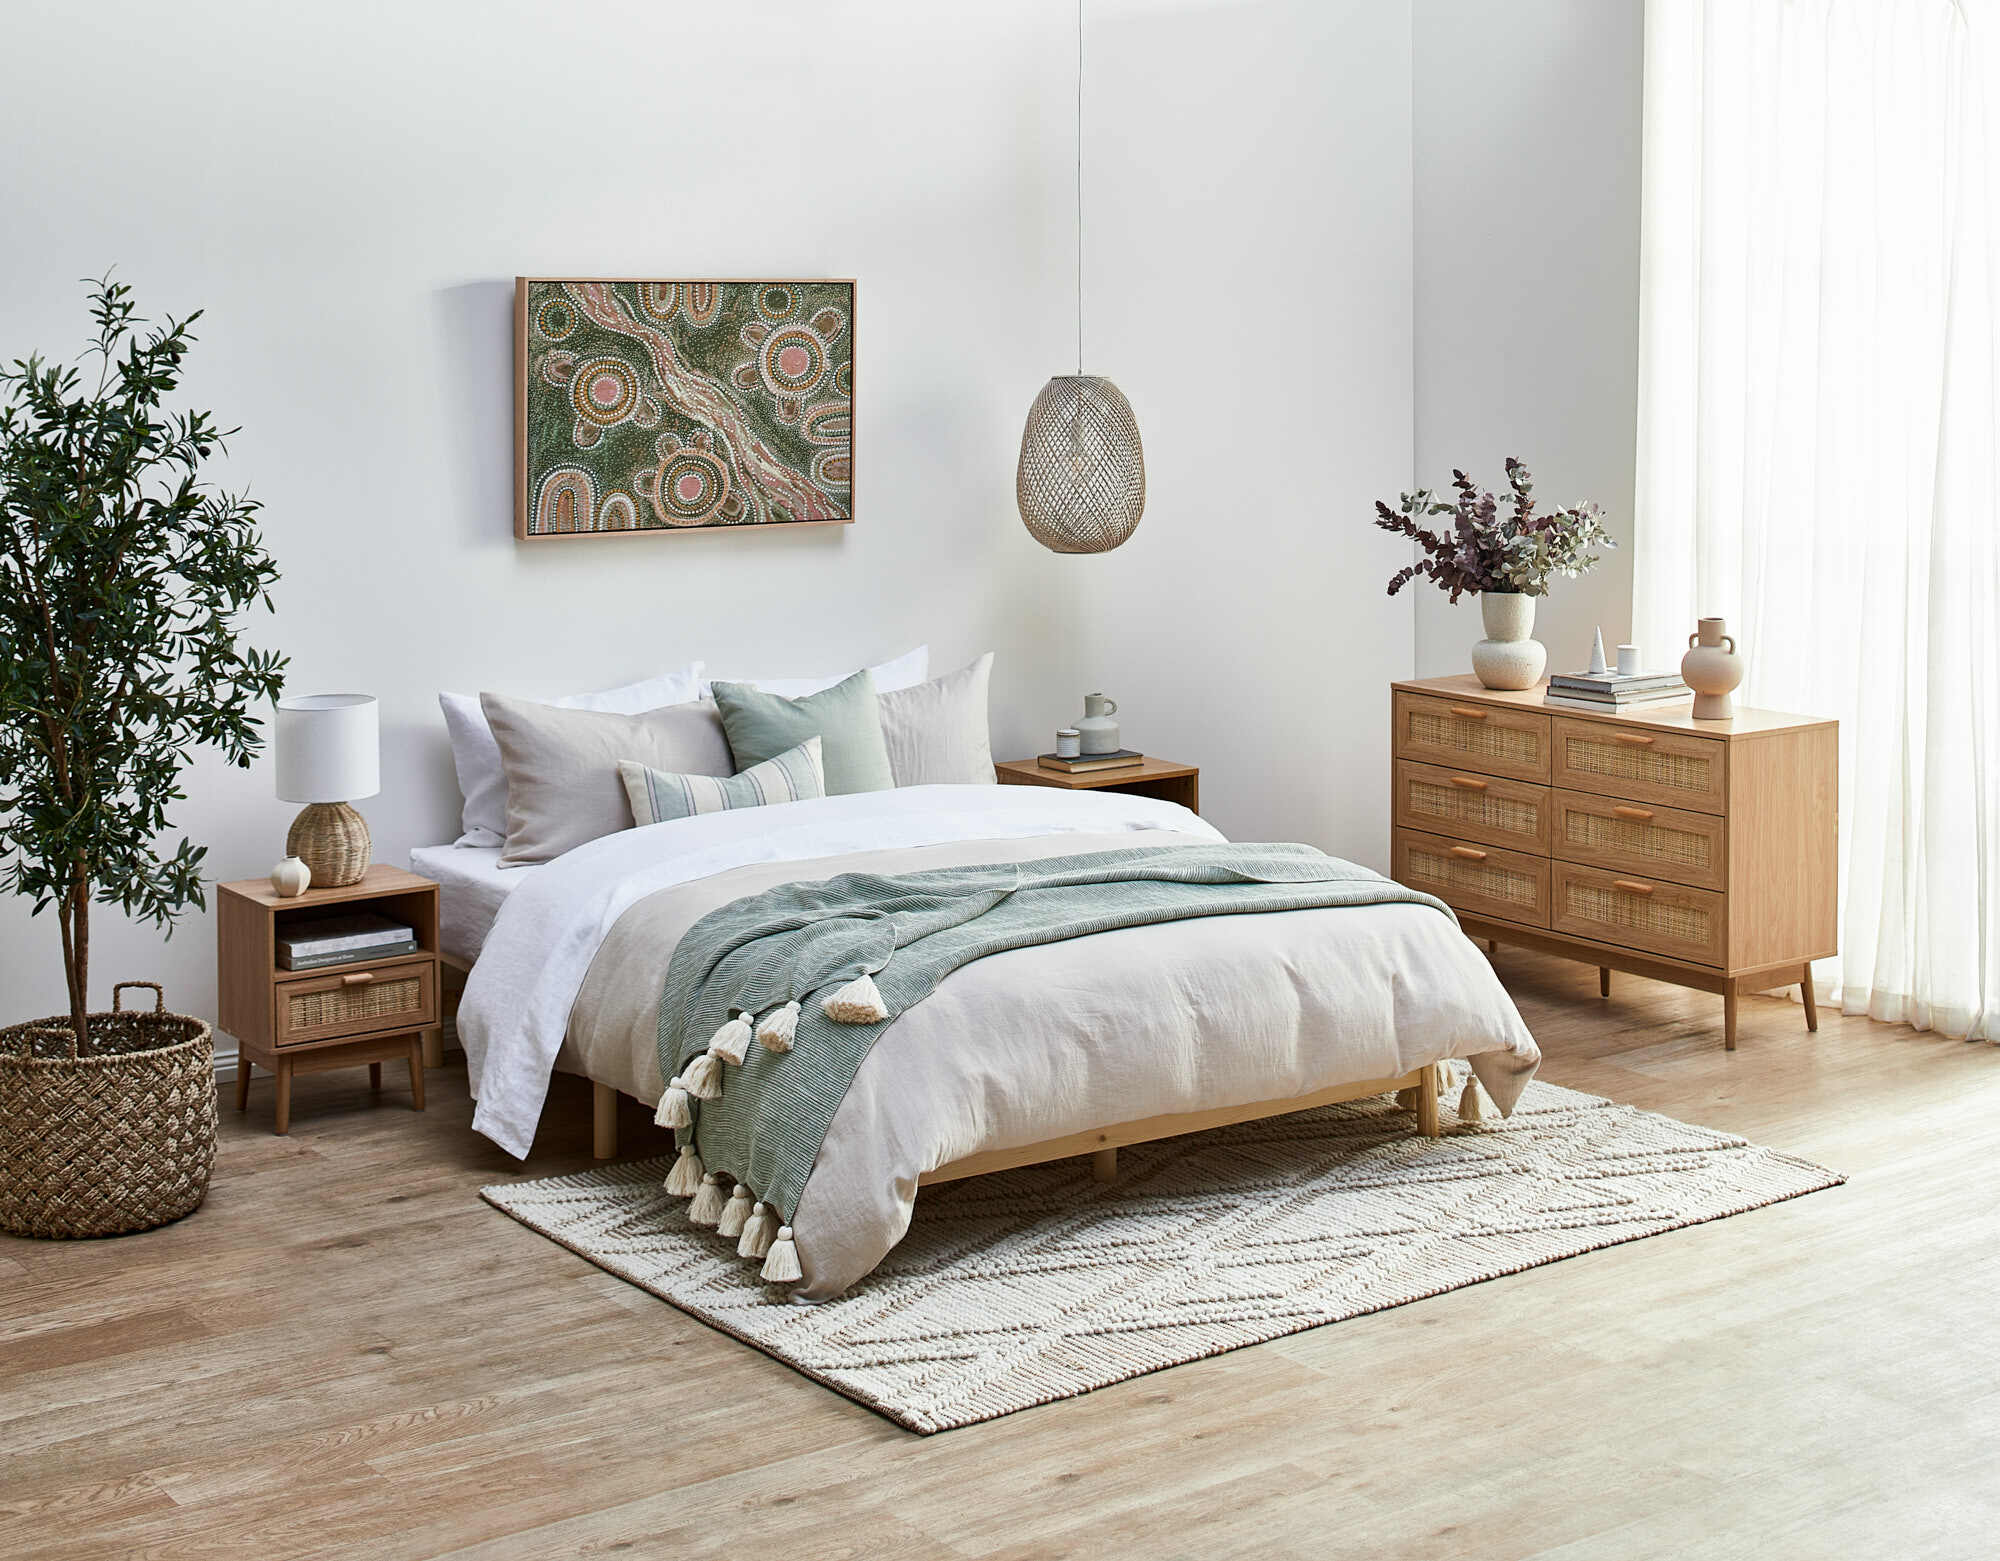 Scandi Bedroom room ideas. Modern Rustic Bedroom. By Temple & Webster